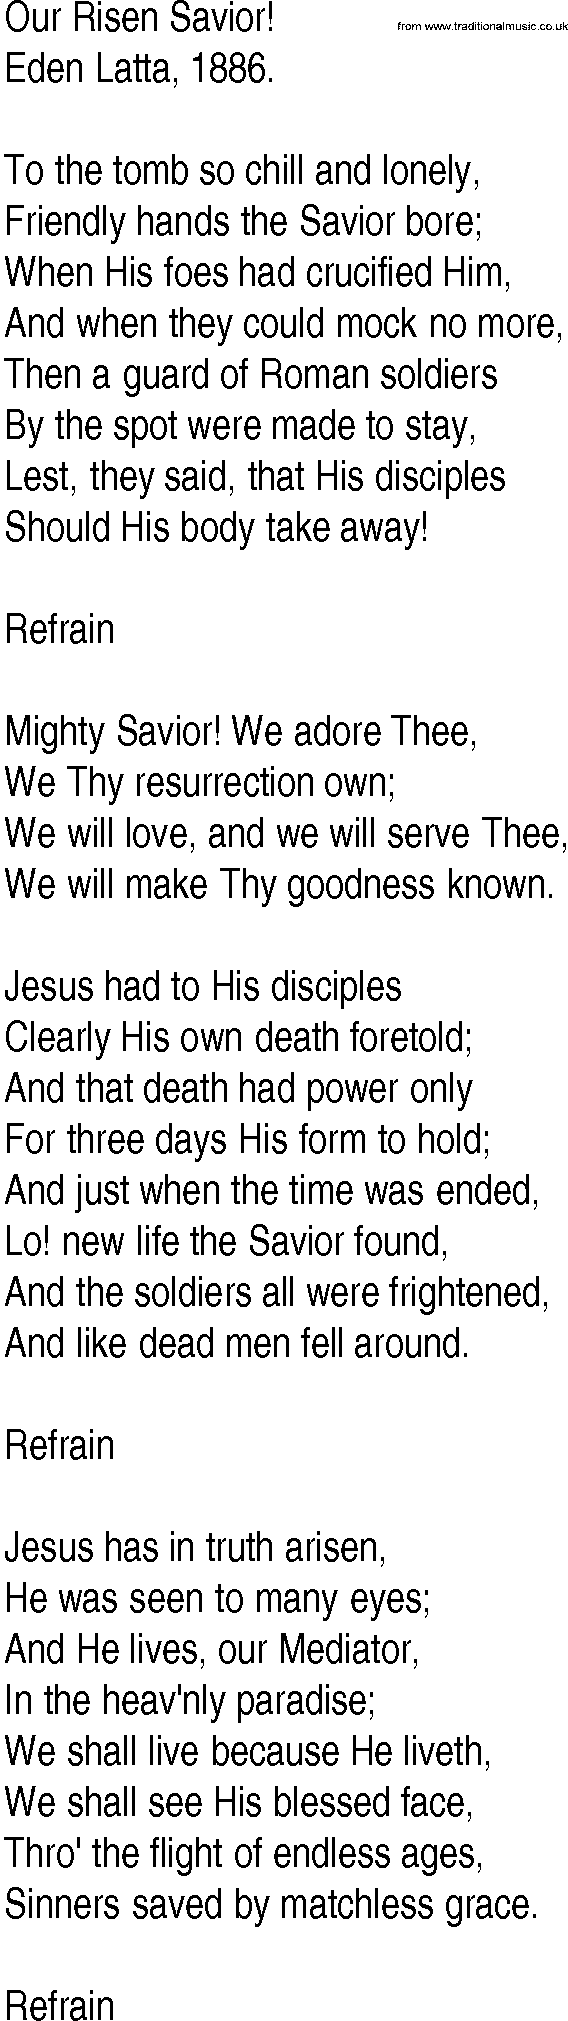 Hymn and Gospel Song: Our Risen Savior! by Eden Latta lyrics